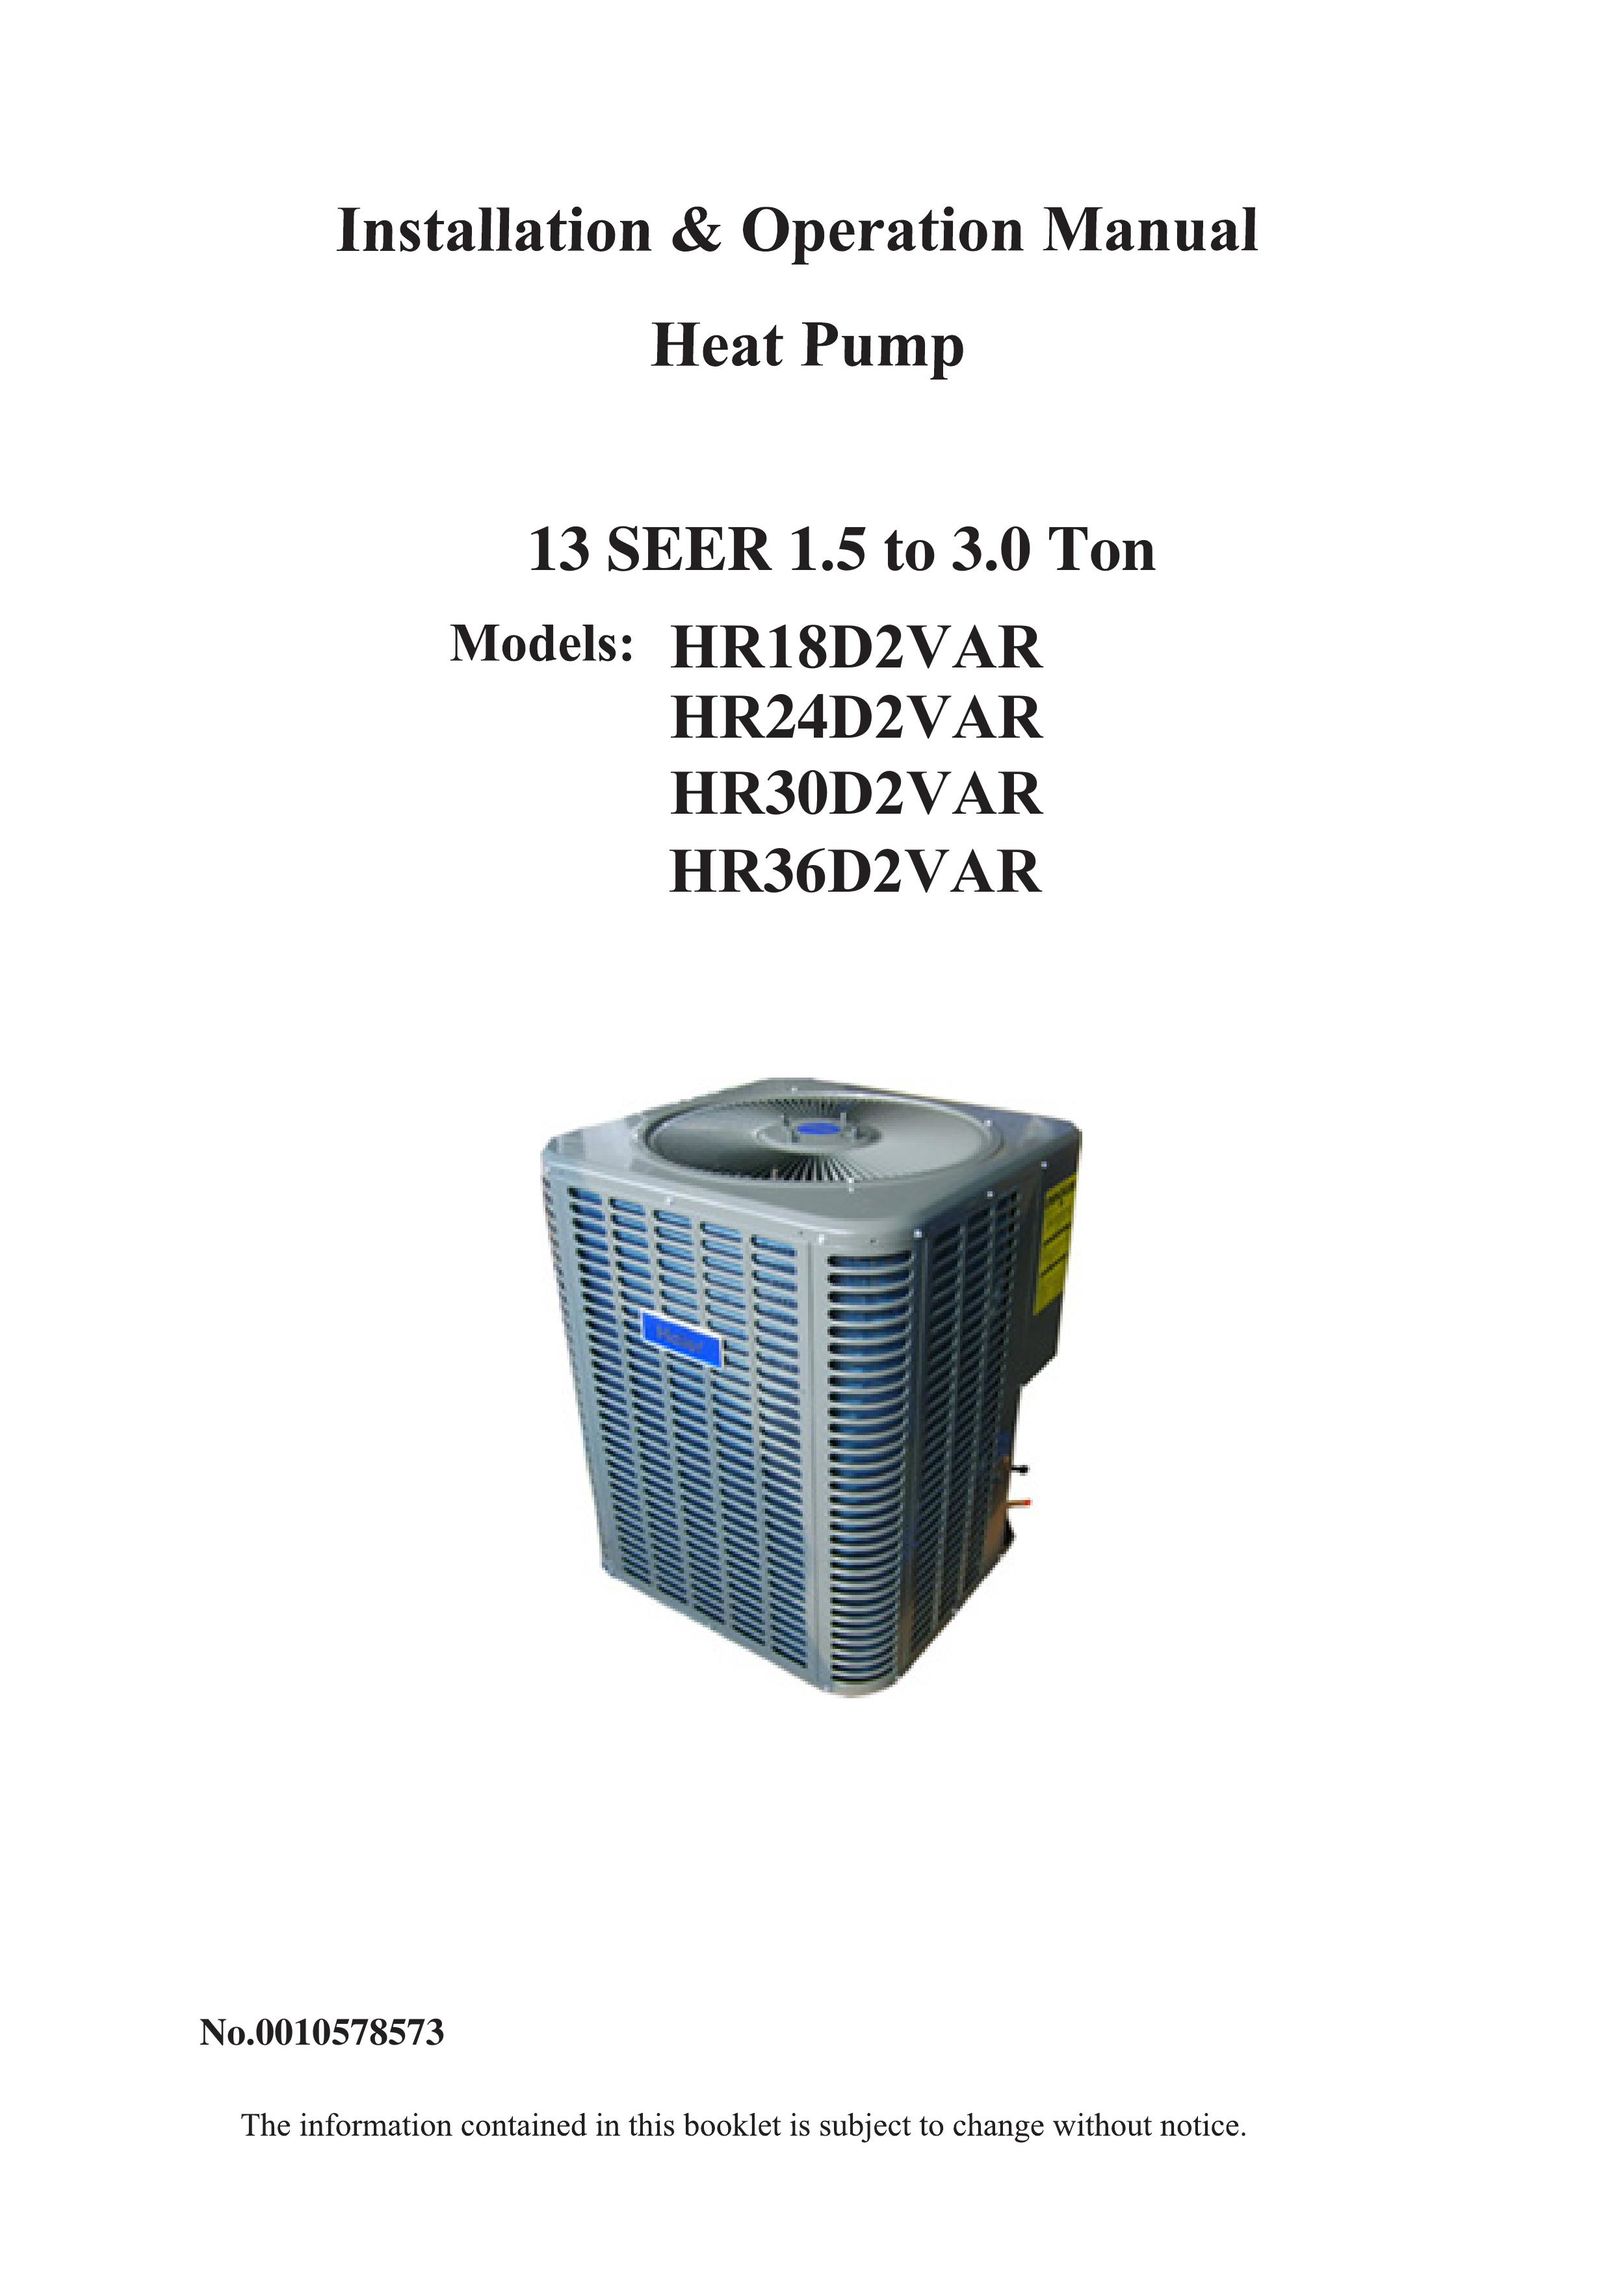 Haier HR24D2VAR Heat Pump User Manual